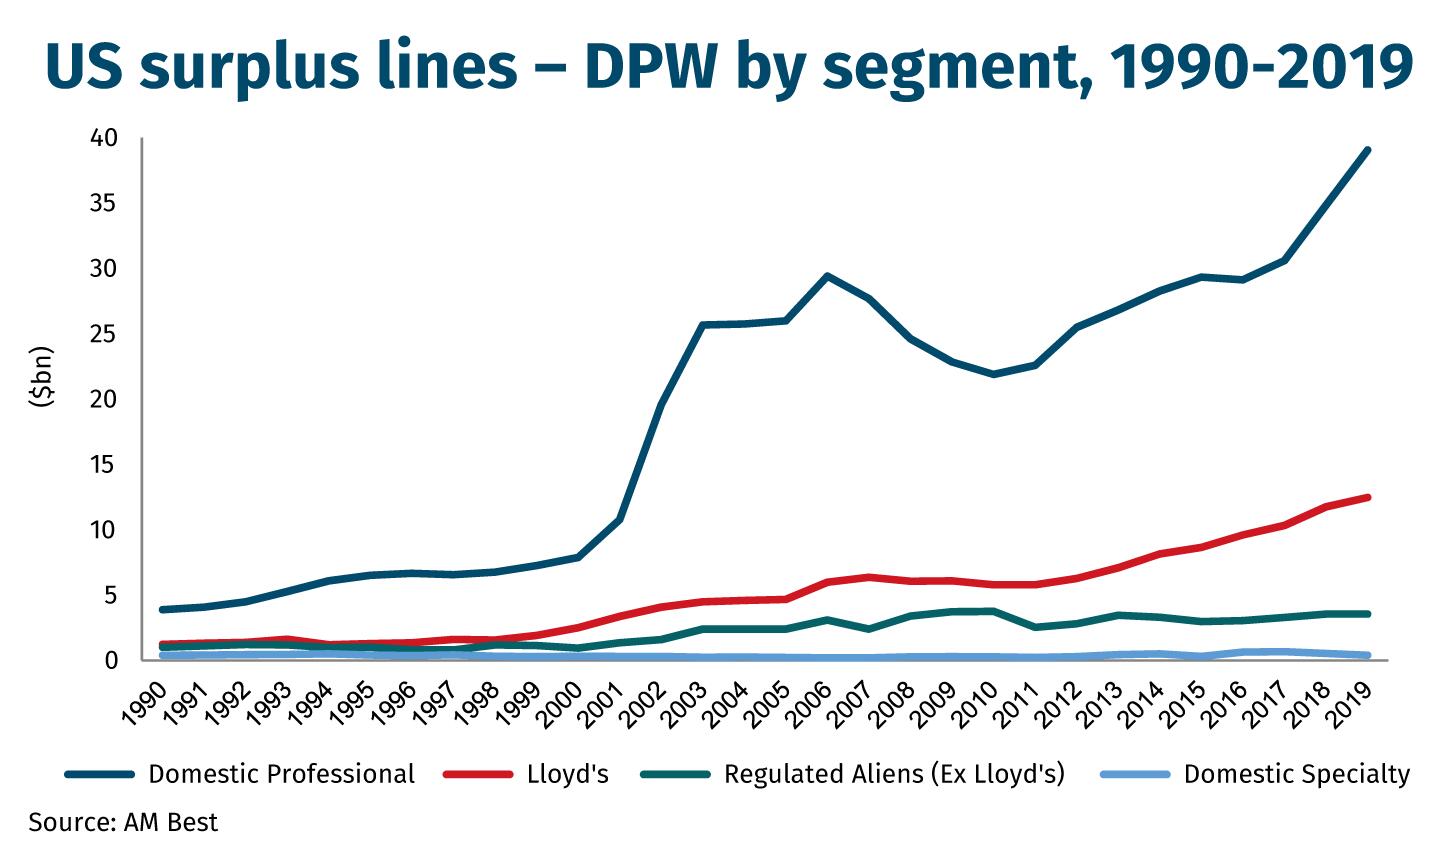 US surplus lines – DPW by segment, 1990-2019